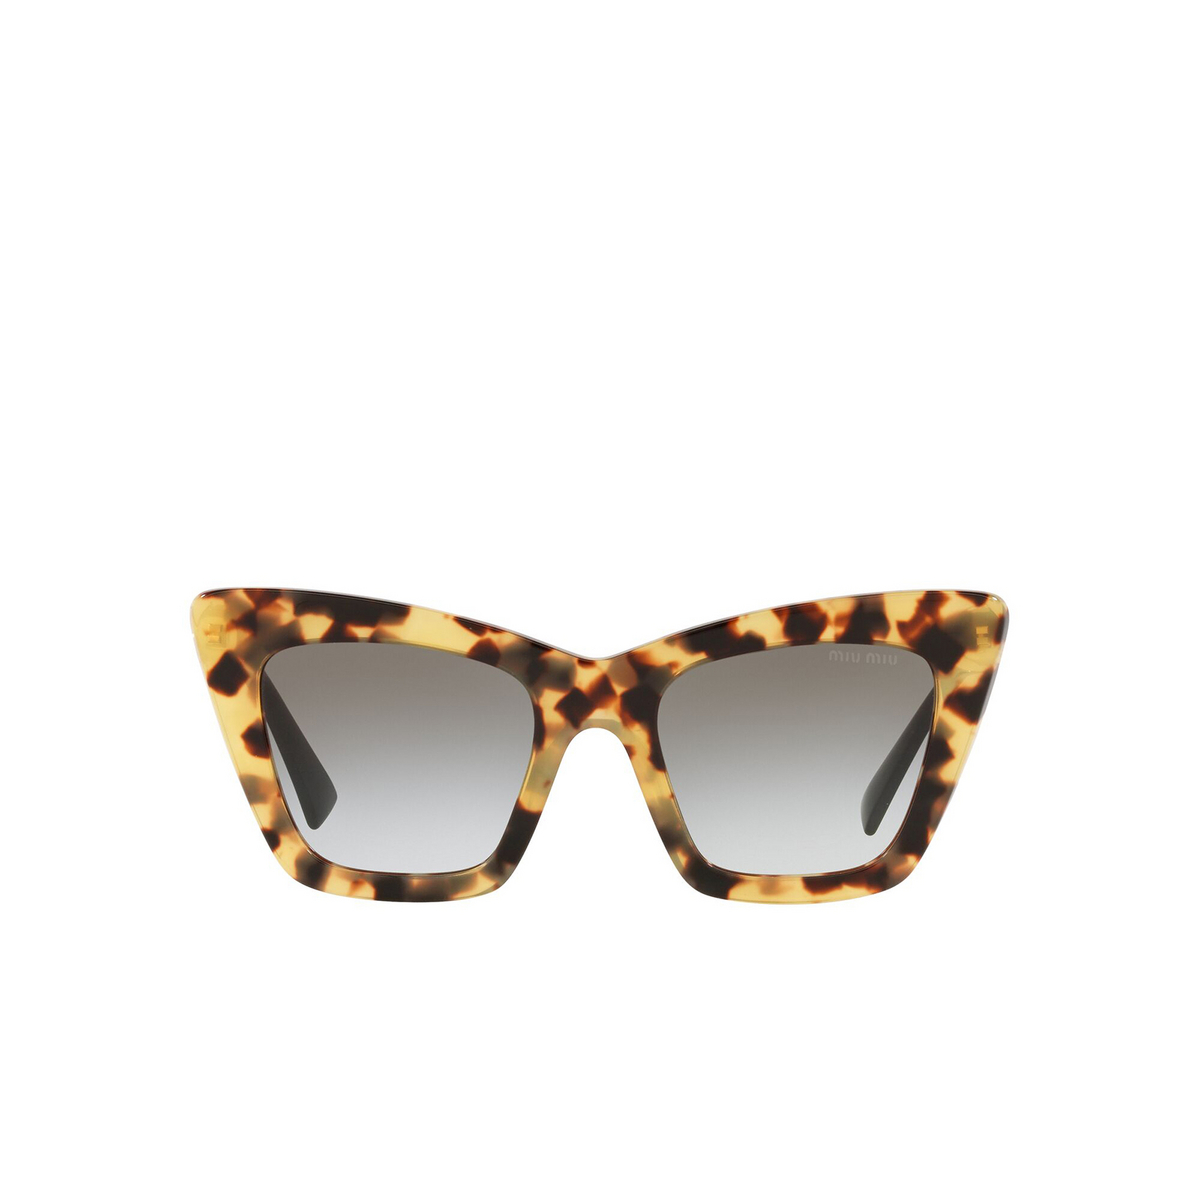 Miu Miu® Cat-eye Sunglasses: MU 01WS color Havana Light 7S00A7 - front view.